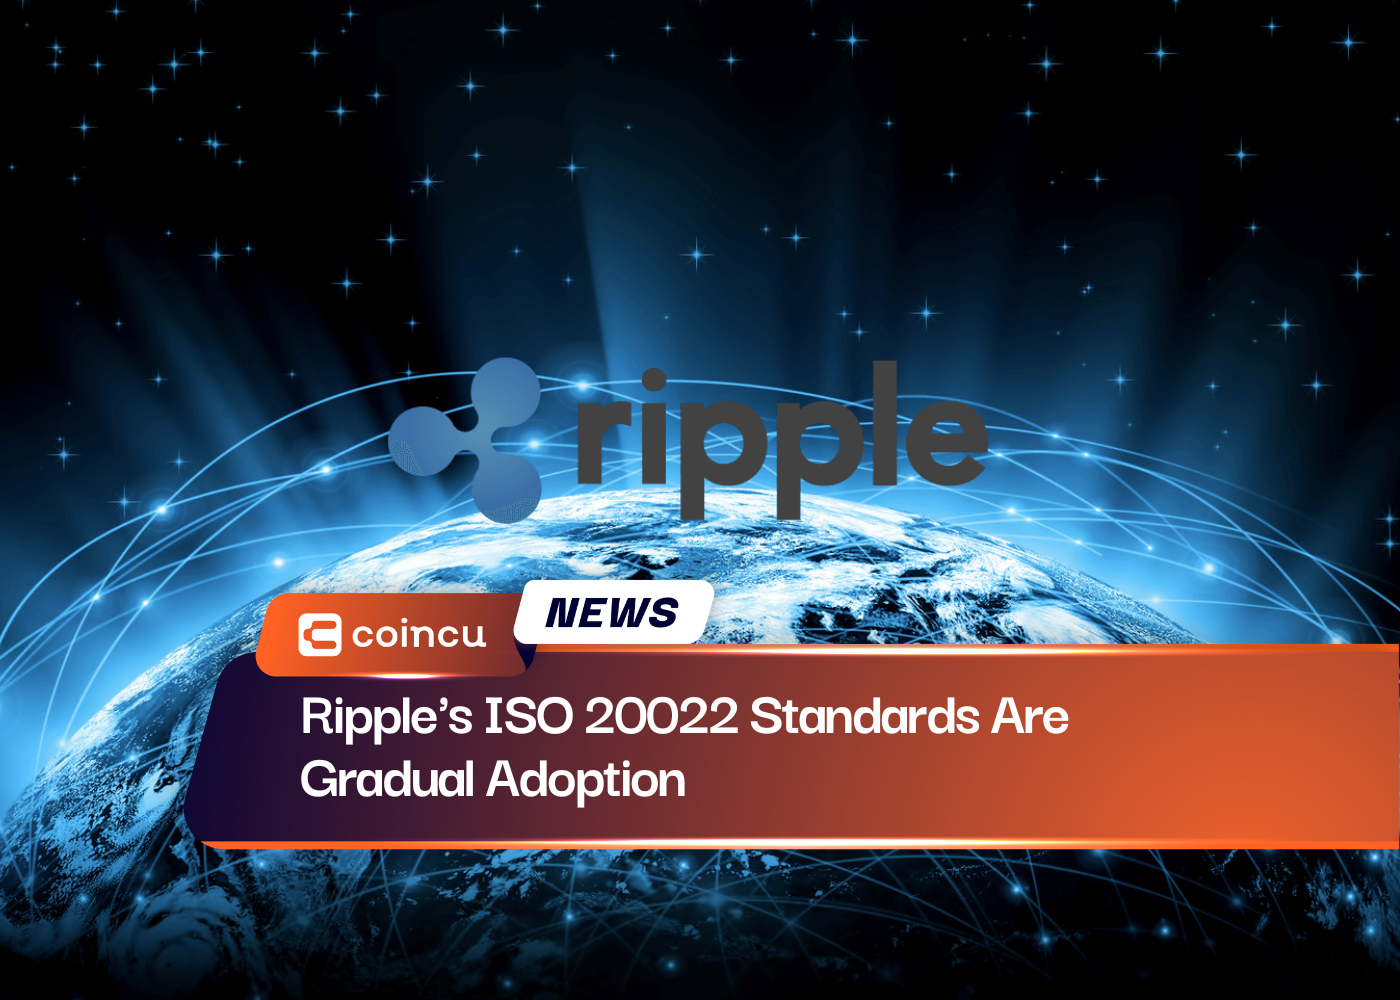 Ripple's ISO 20022 Standards Are Gradual Adoption